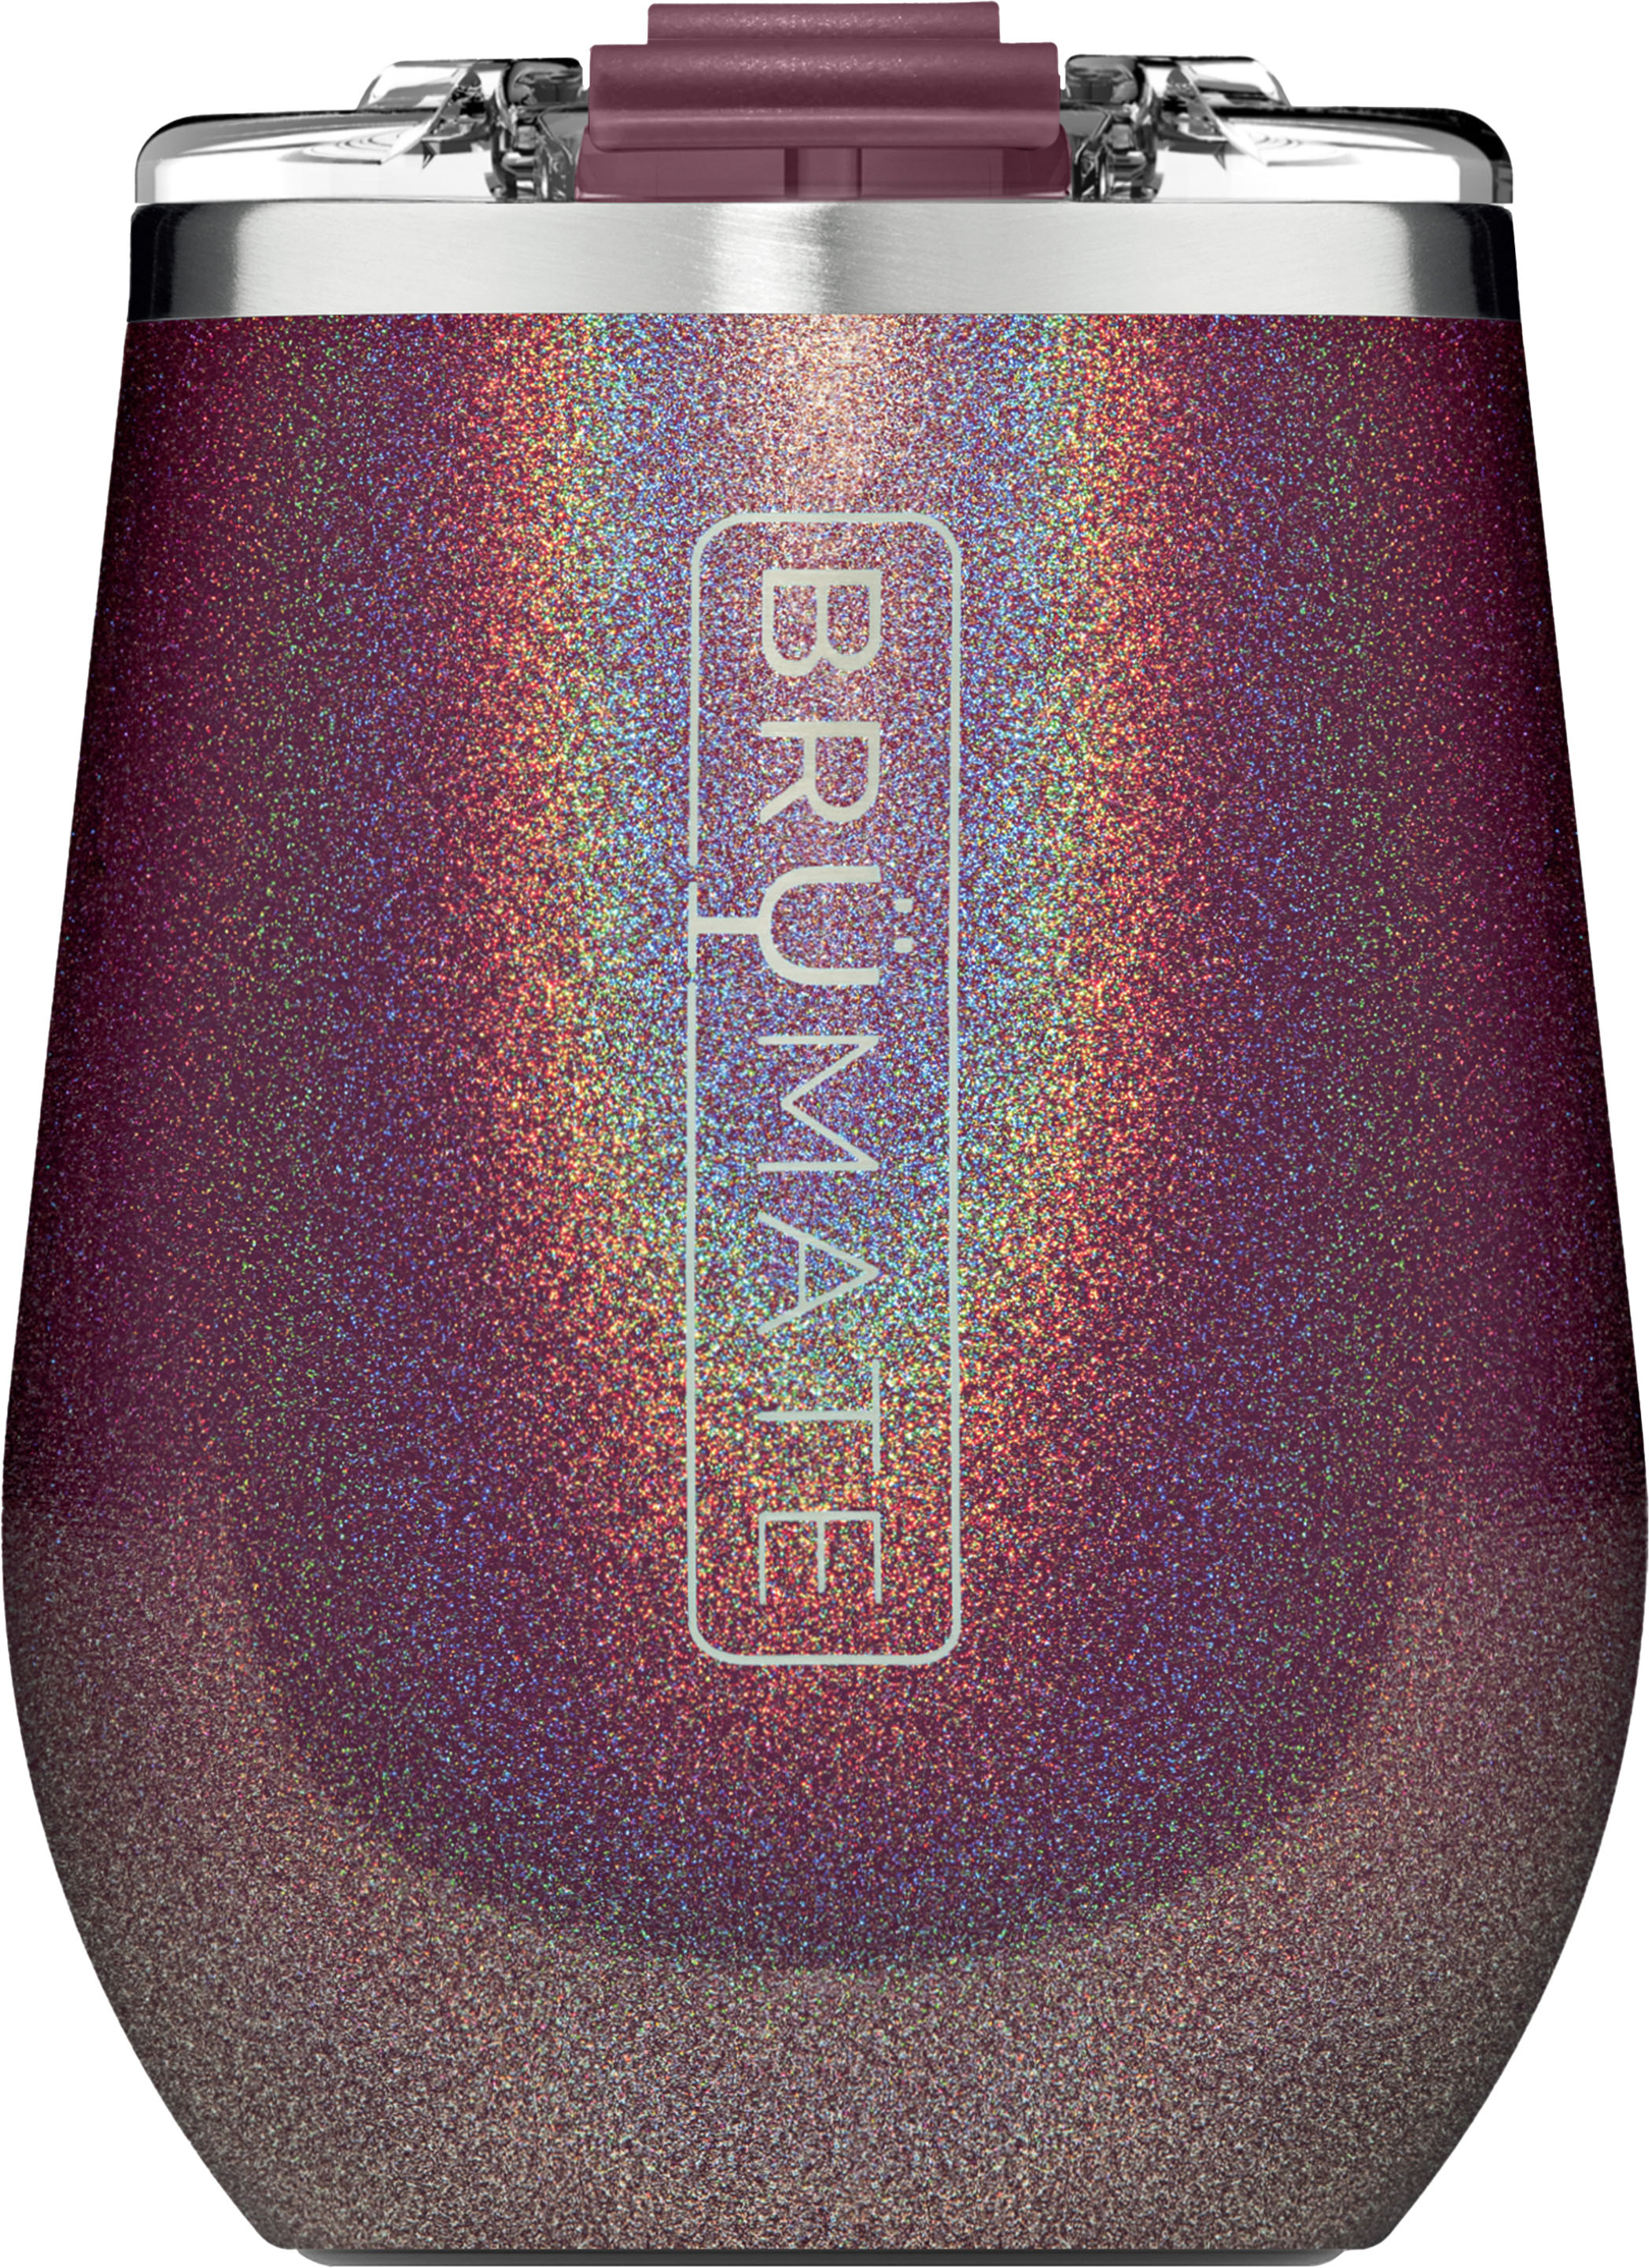 Brumate Nav XL Glitter Charcoal - The Magnolia